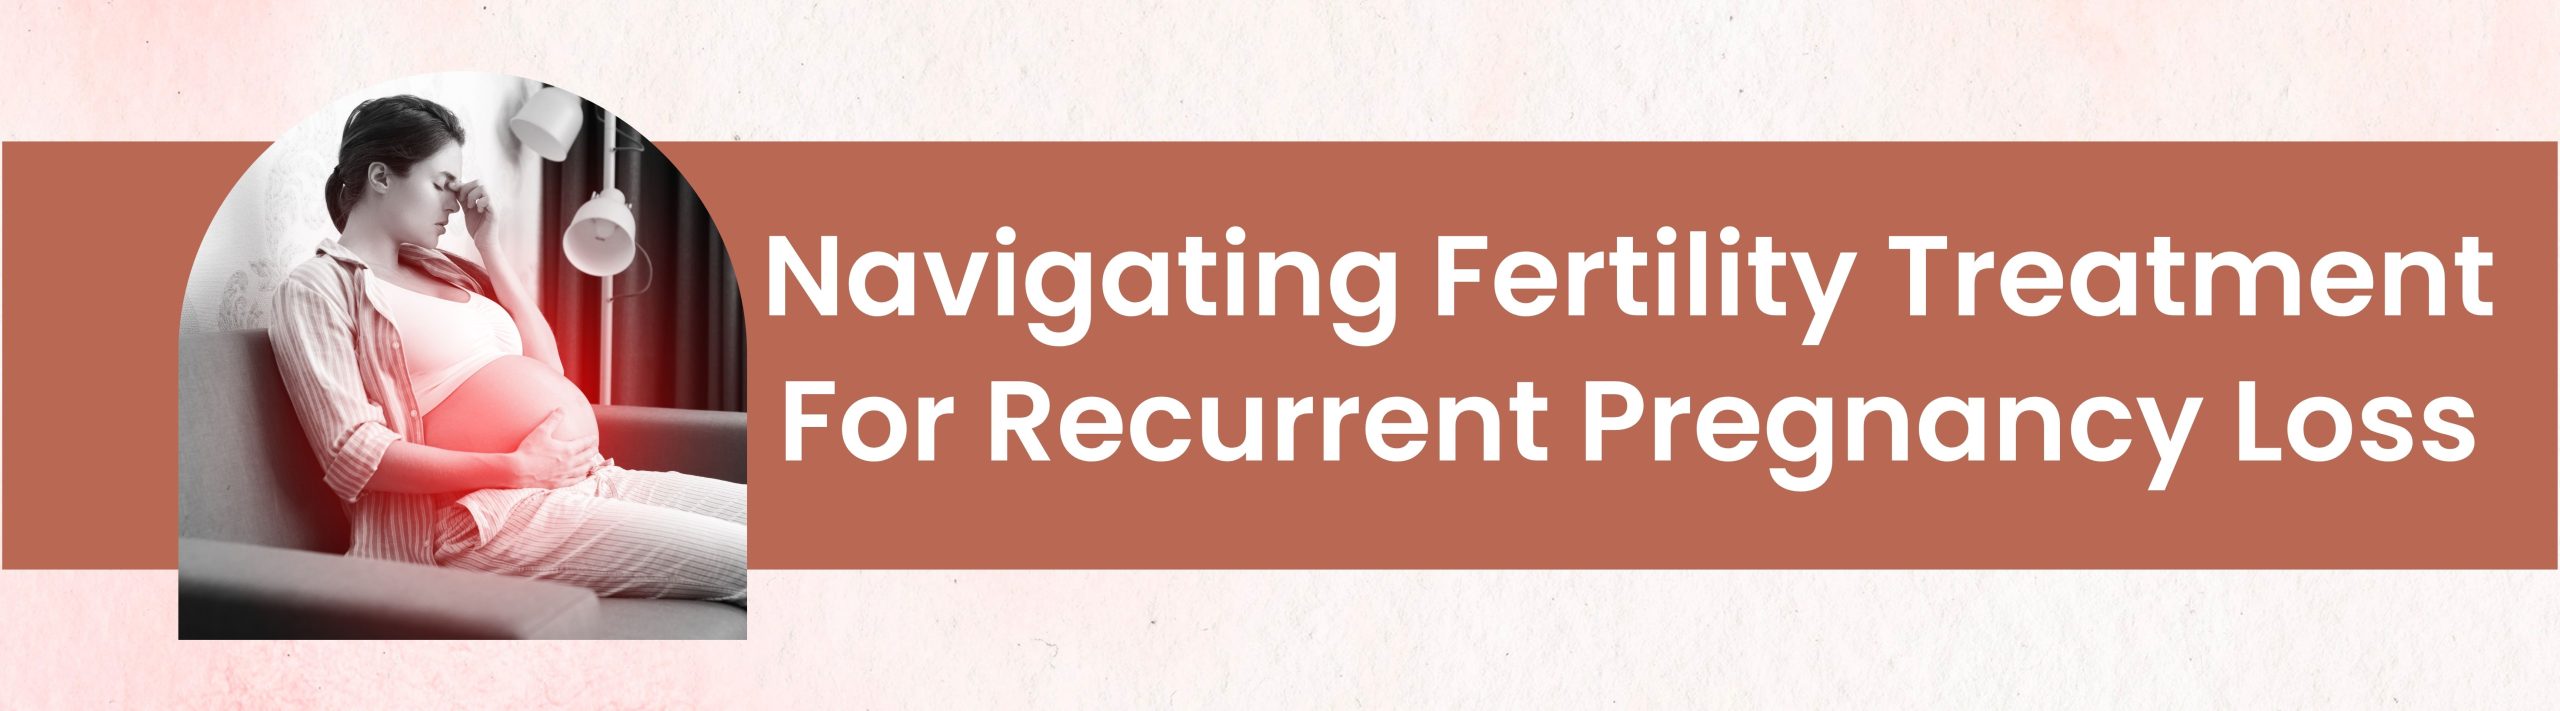 Navigating Fertility Treatment for Recurrent Pregnancy Loss